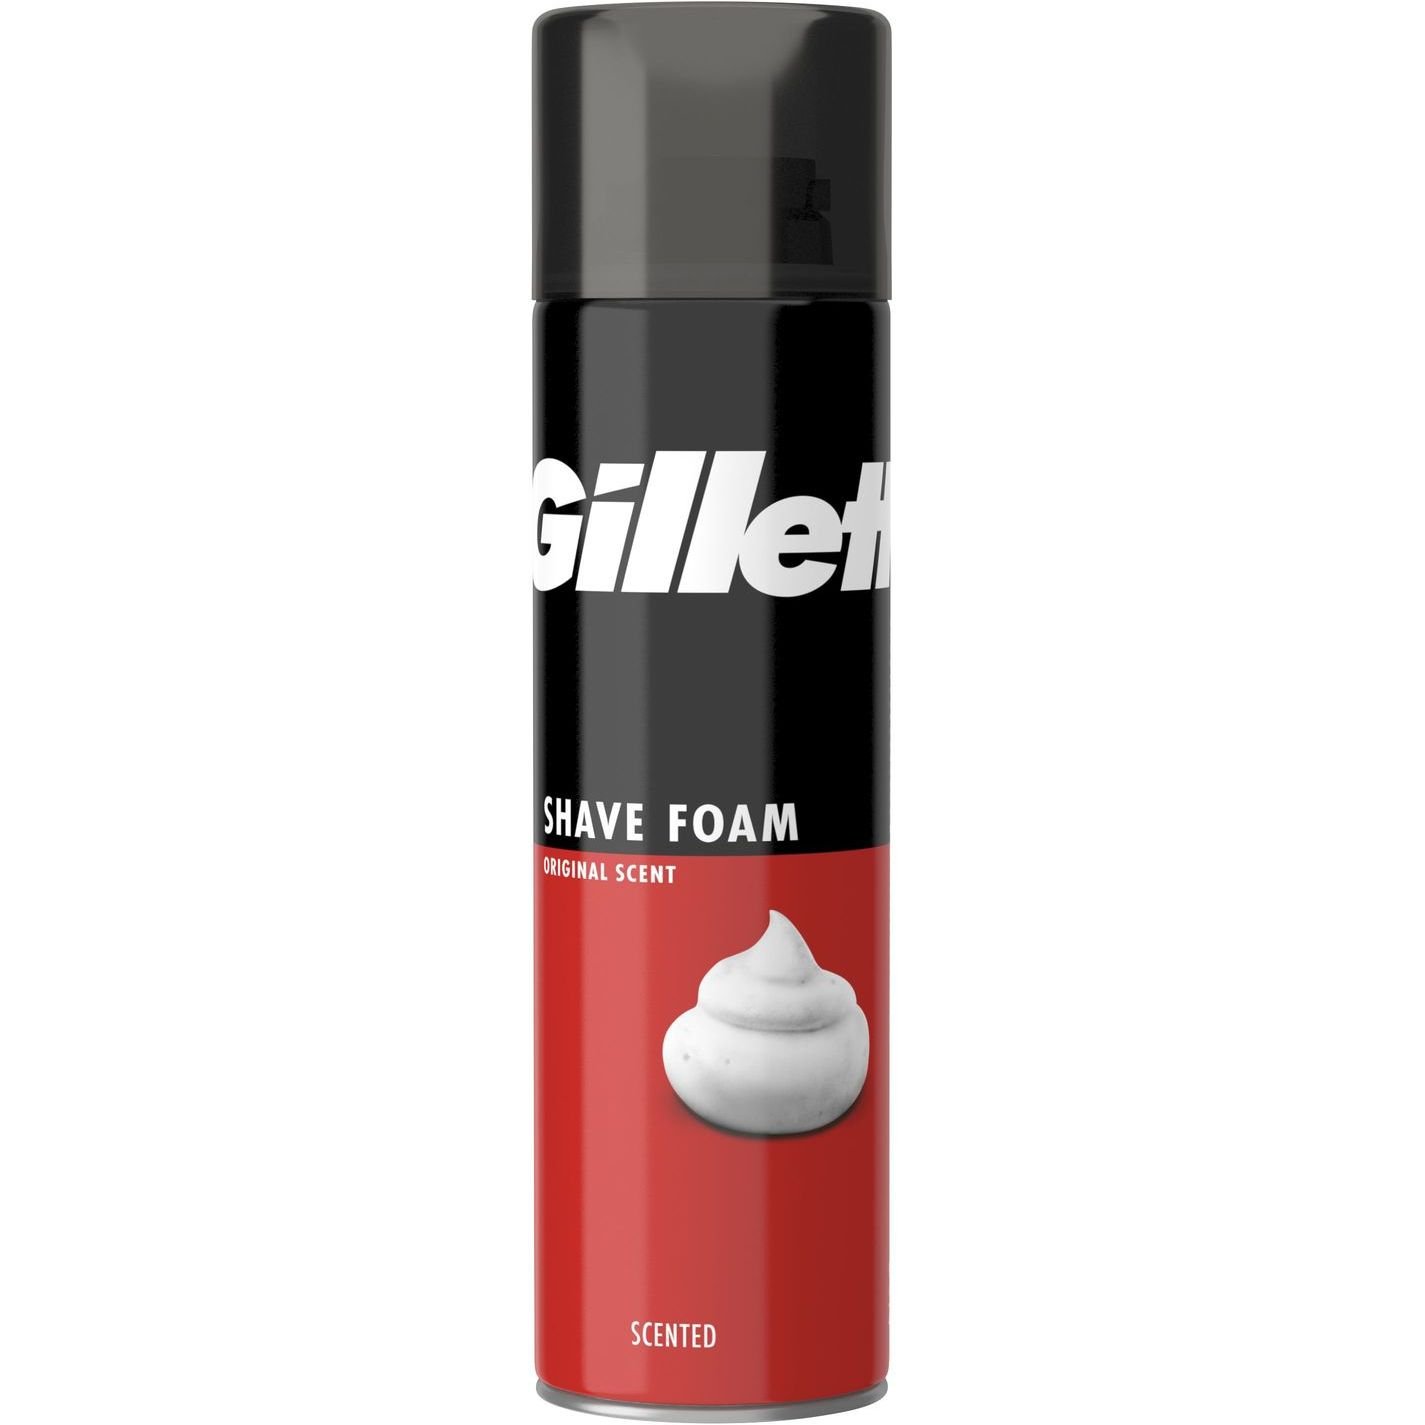 Піна для гоління Gillette Classic Original Scent, 200 мл - фото 1